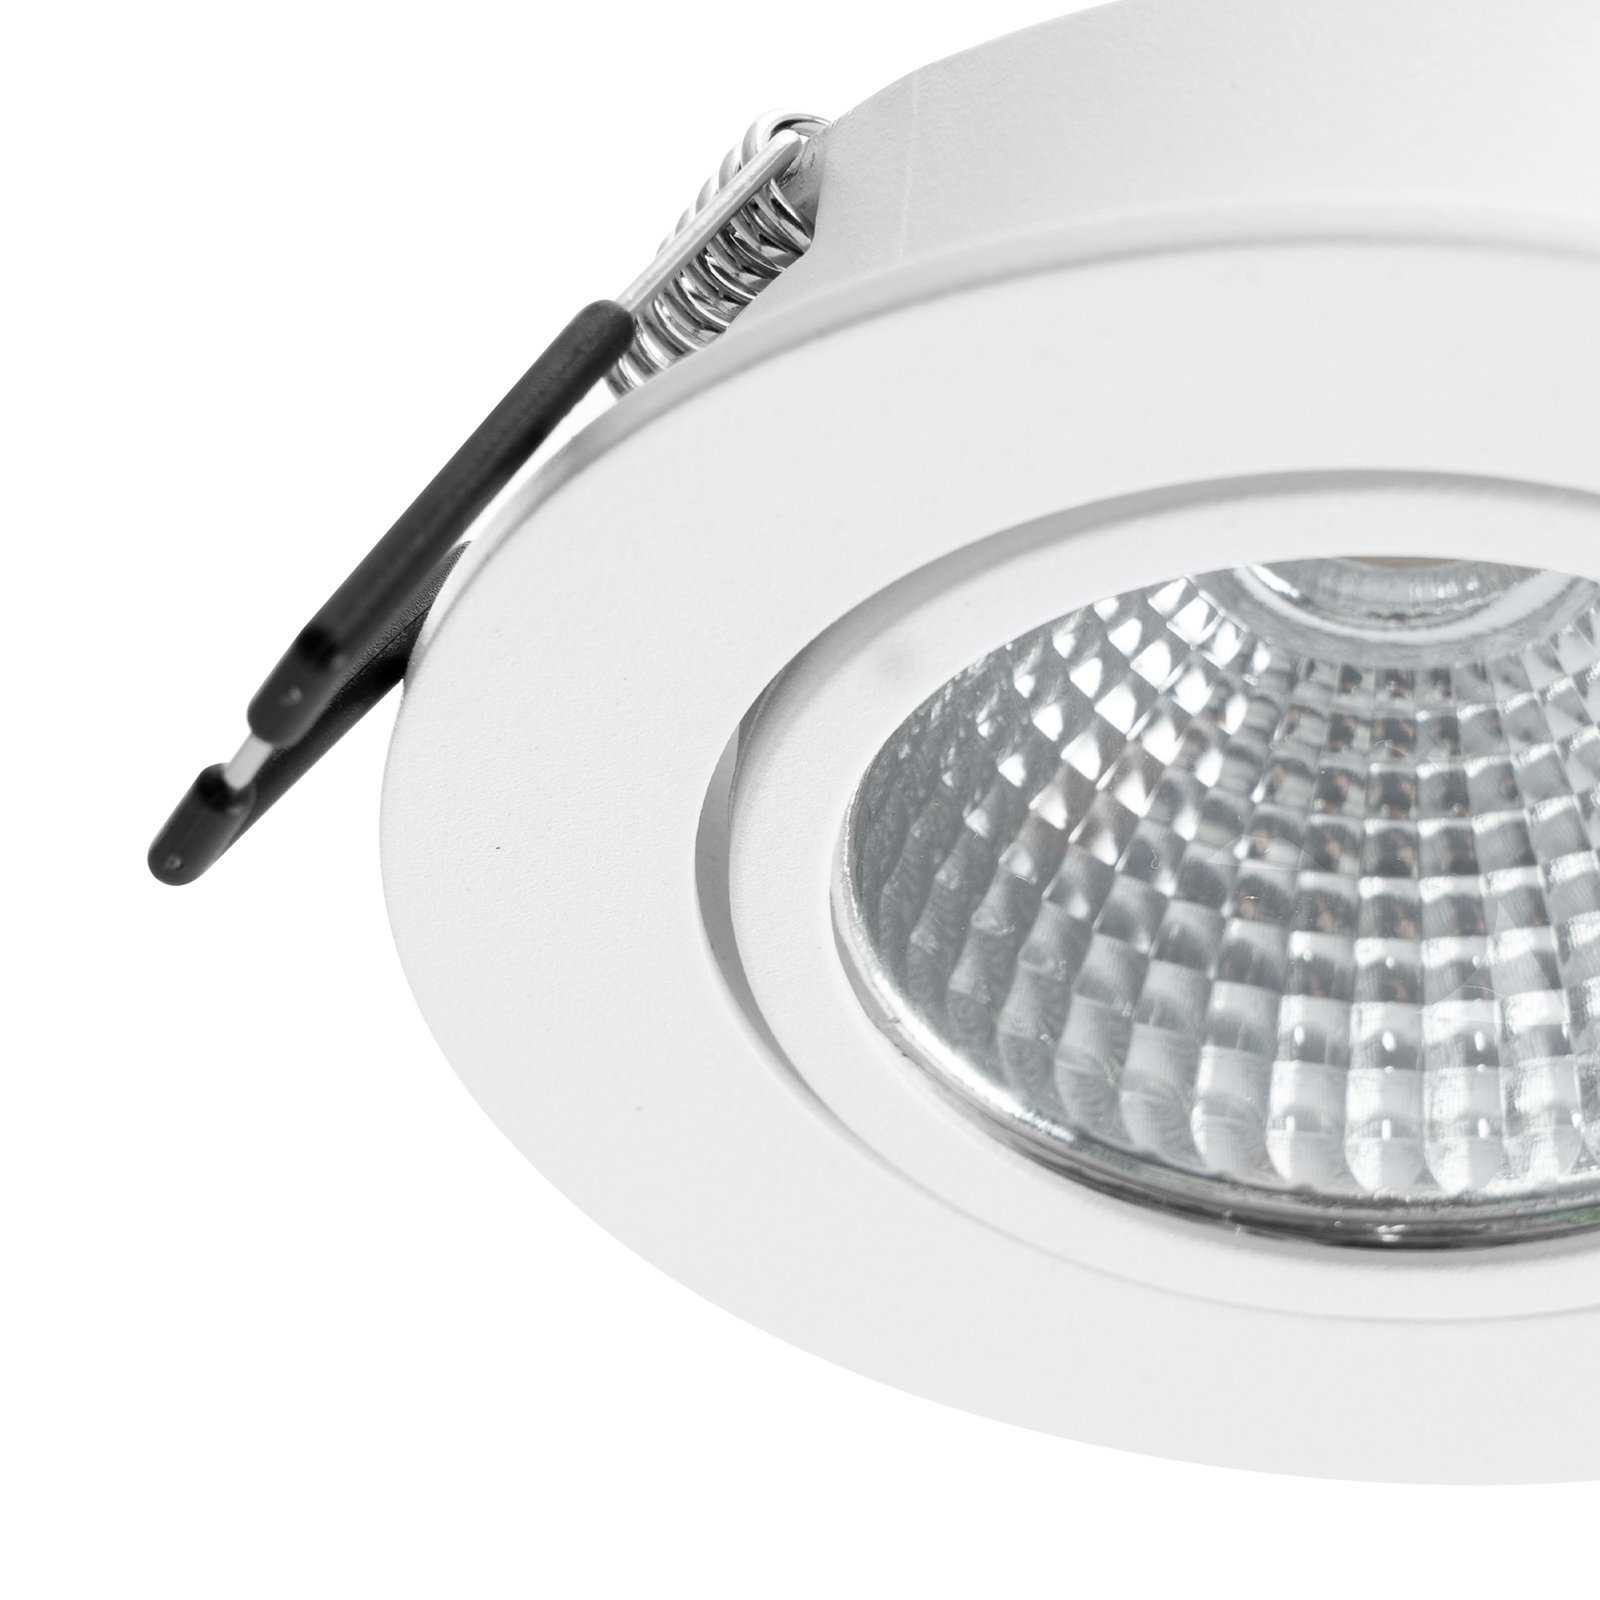 Arcchio LED-es Zarik downlight, fehér, 3,000K